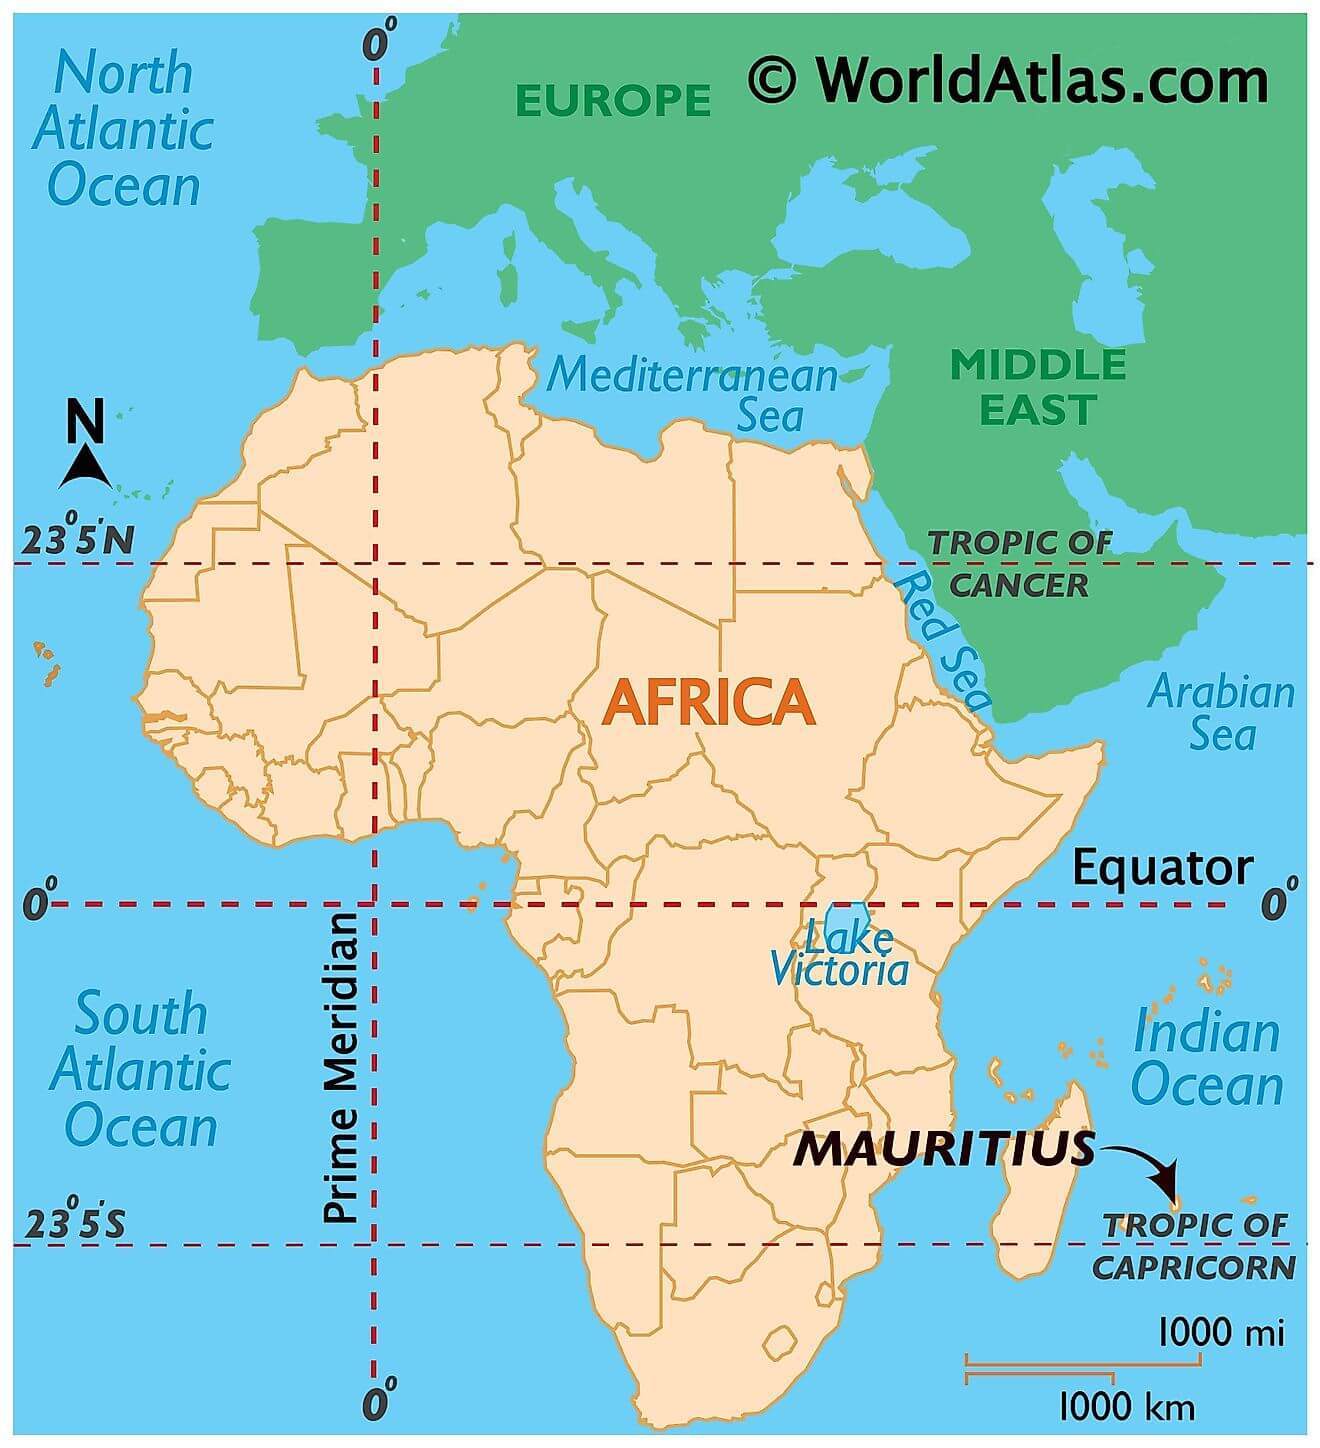 Mauritius ở đâu?